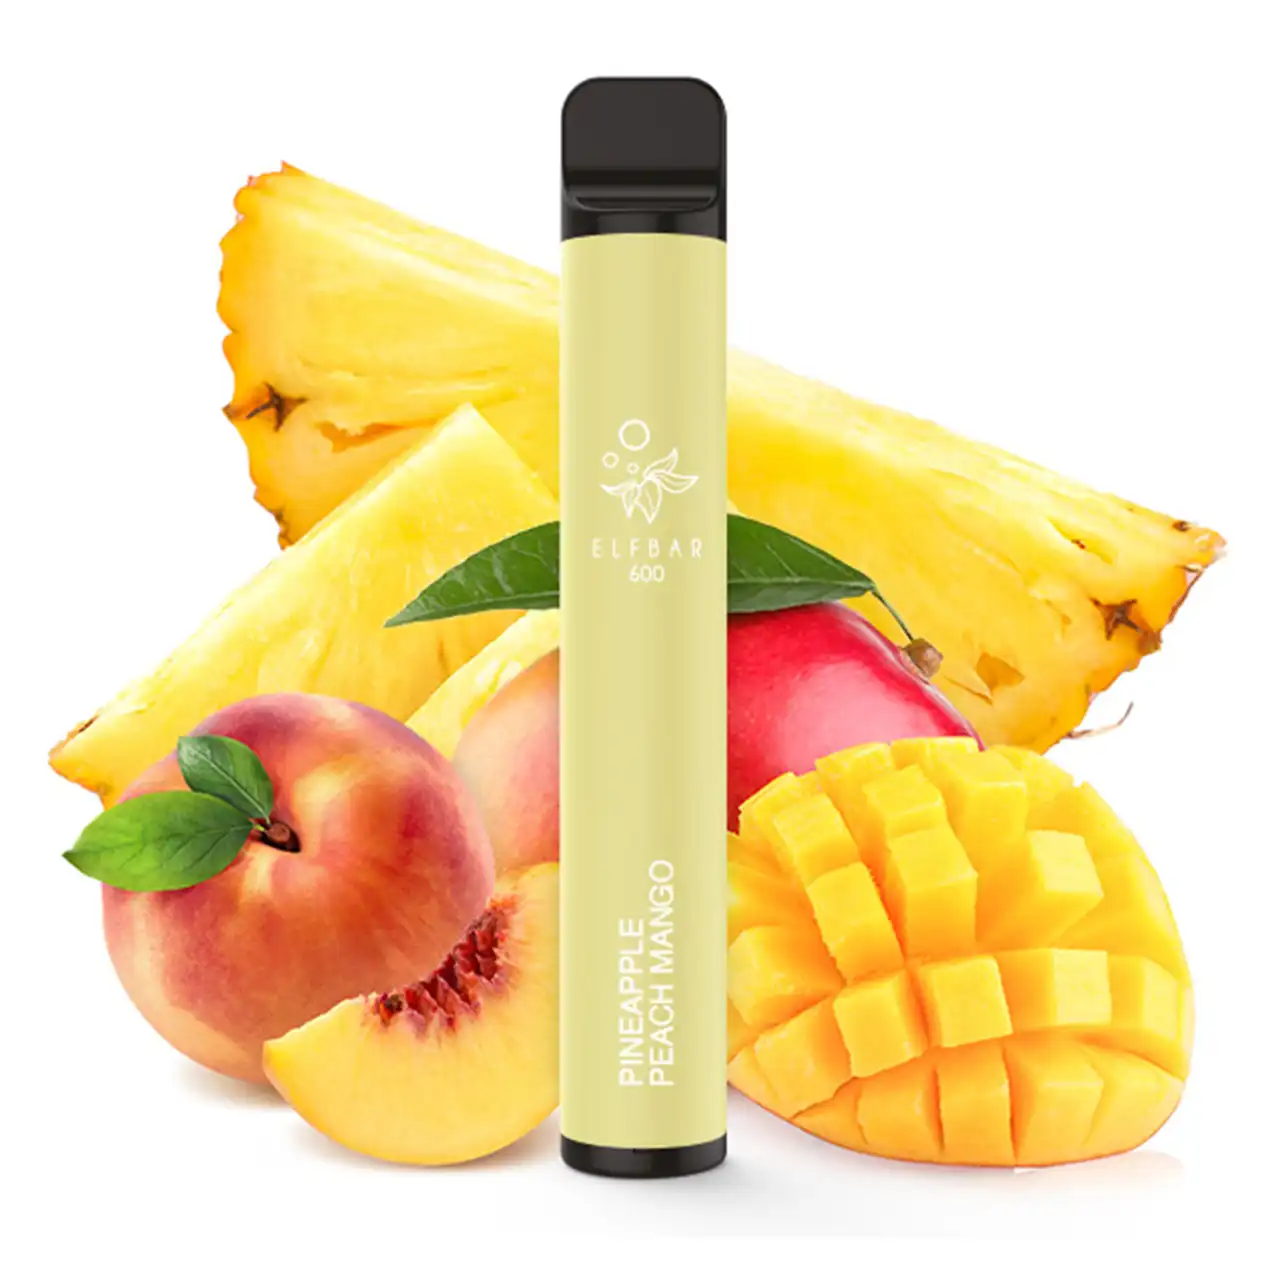 Elf Bar 600 Pineapple Peach Mango Einweg E-Zigarette